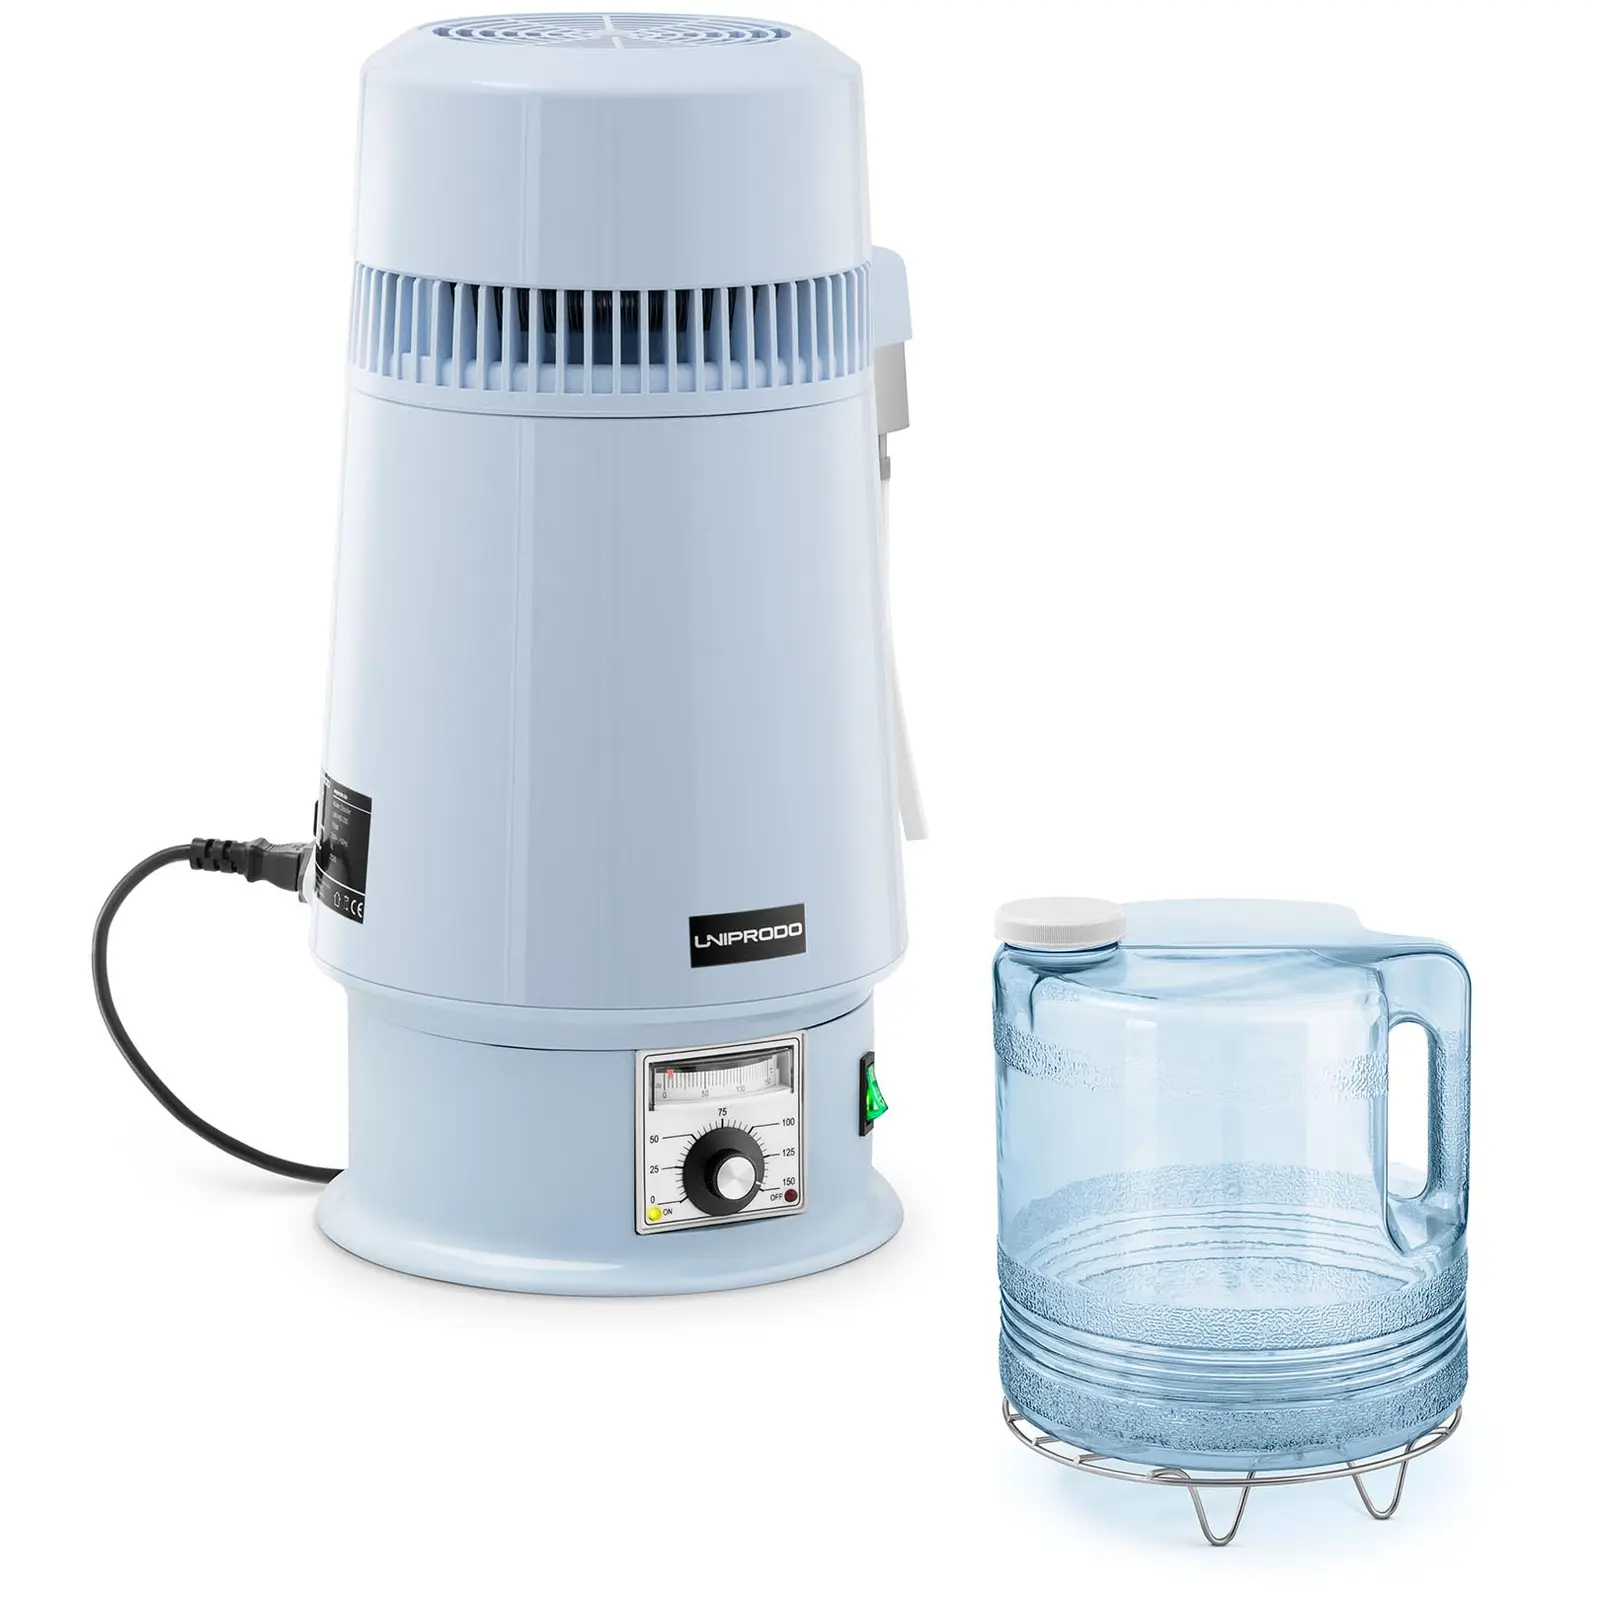 Destylator do wody - 4 l - regulacja temperatury